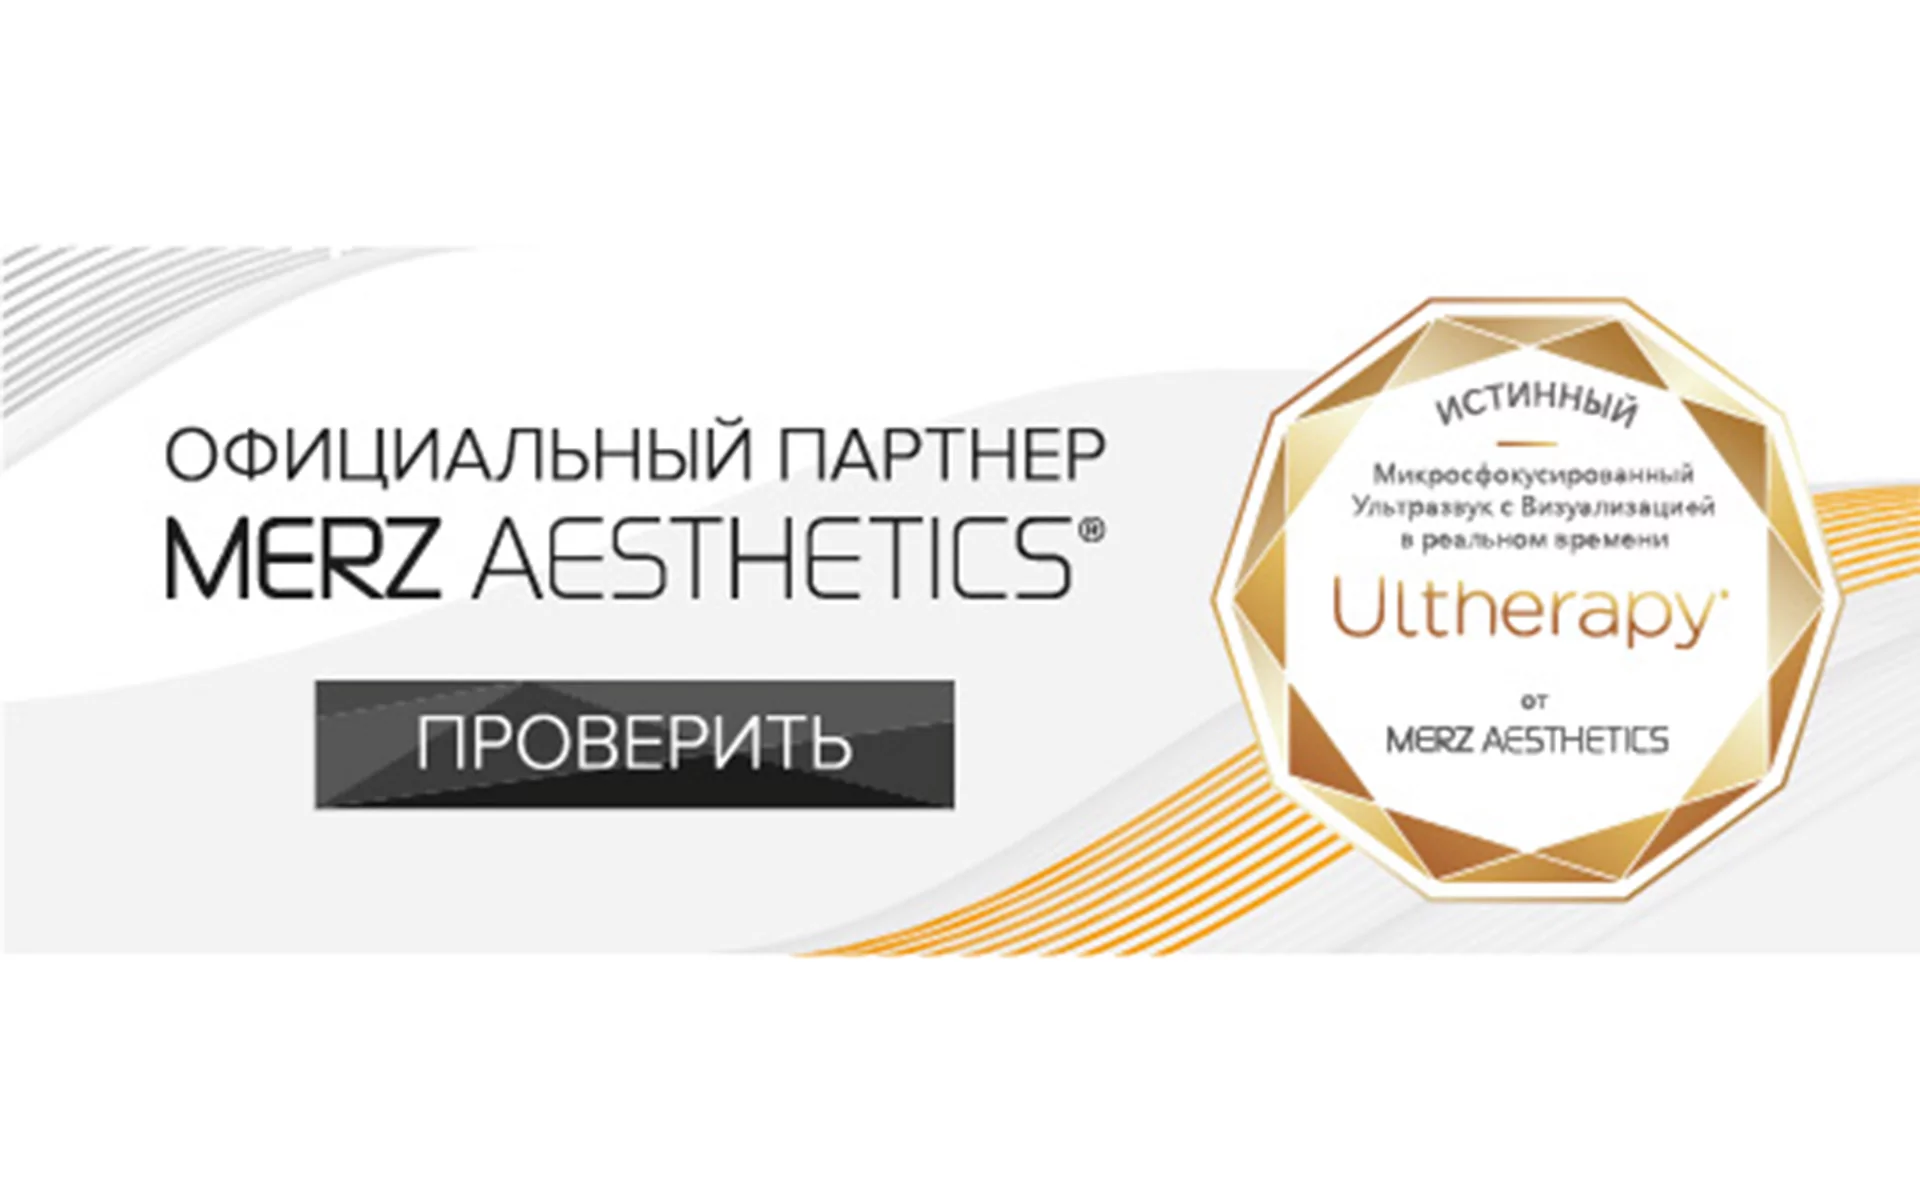 Merz Aesthetics - Ultherapy